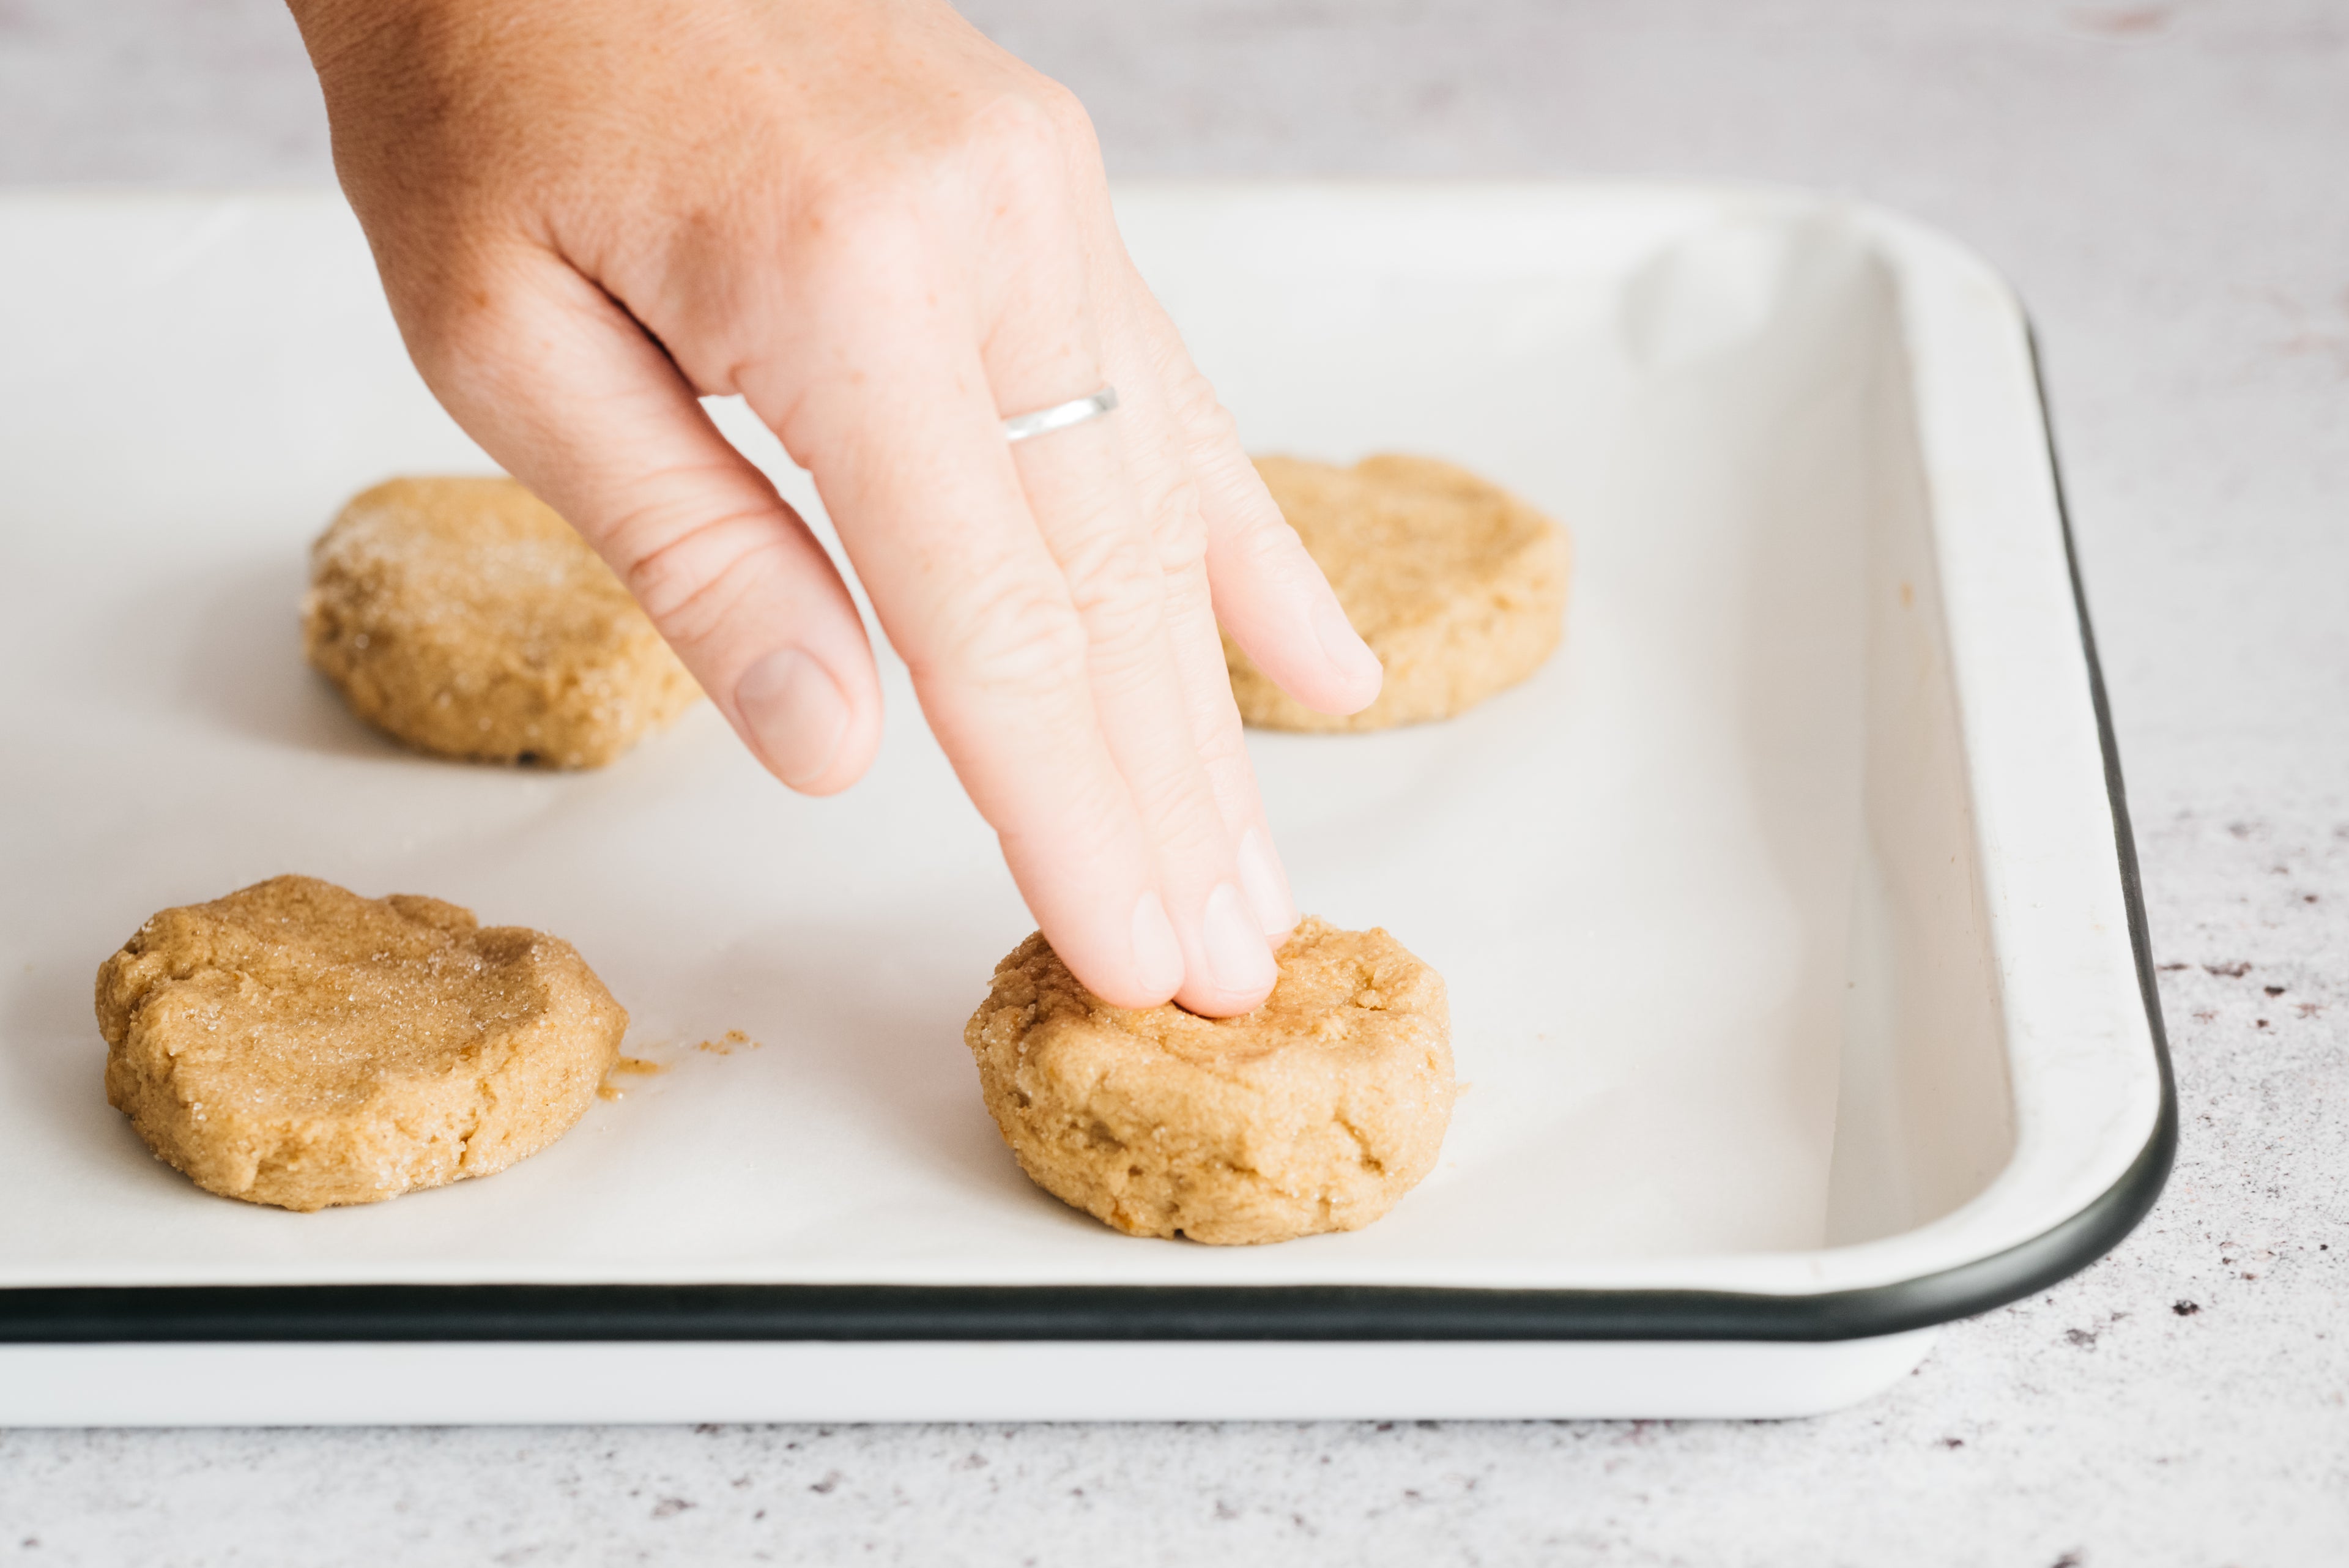 Hand pushing down cookie dough